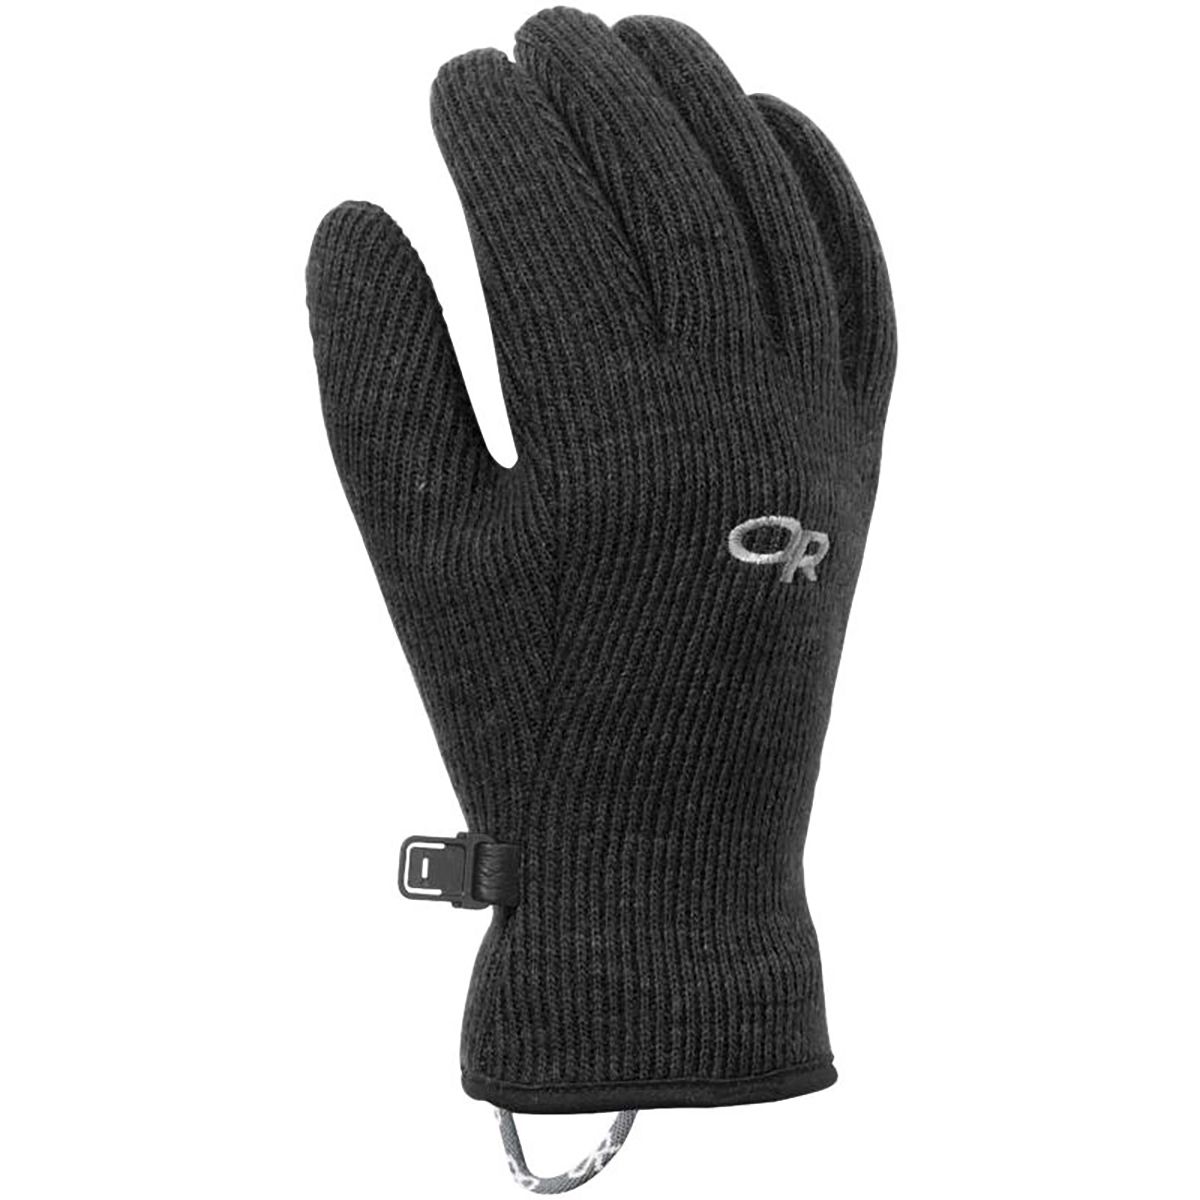 Outdoor Research Flurry Sensor Glove - Women's